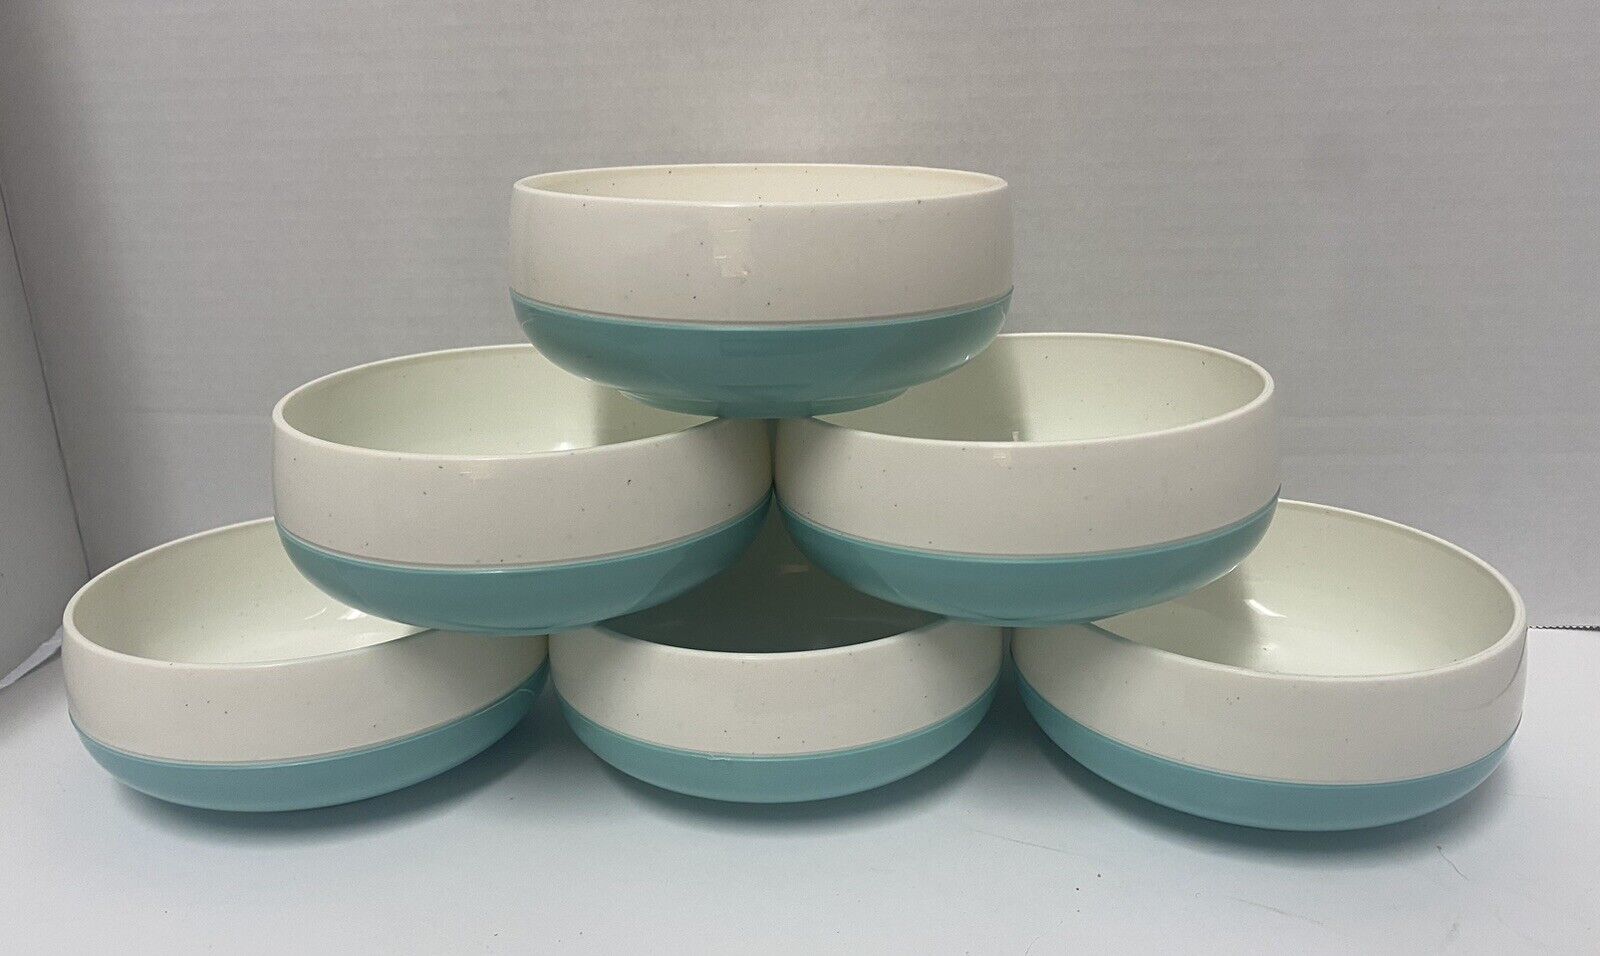 Bopp-Decker Vacron - Insulated Bowls Turquoise/White Set Of 6 - Retro MCM